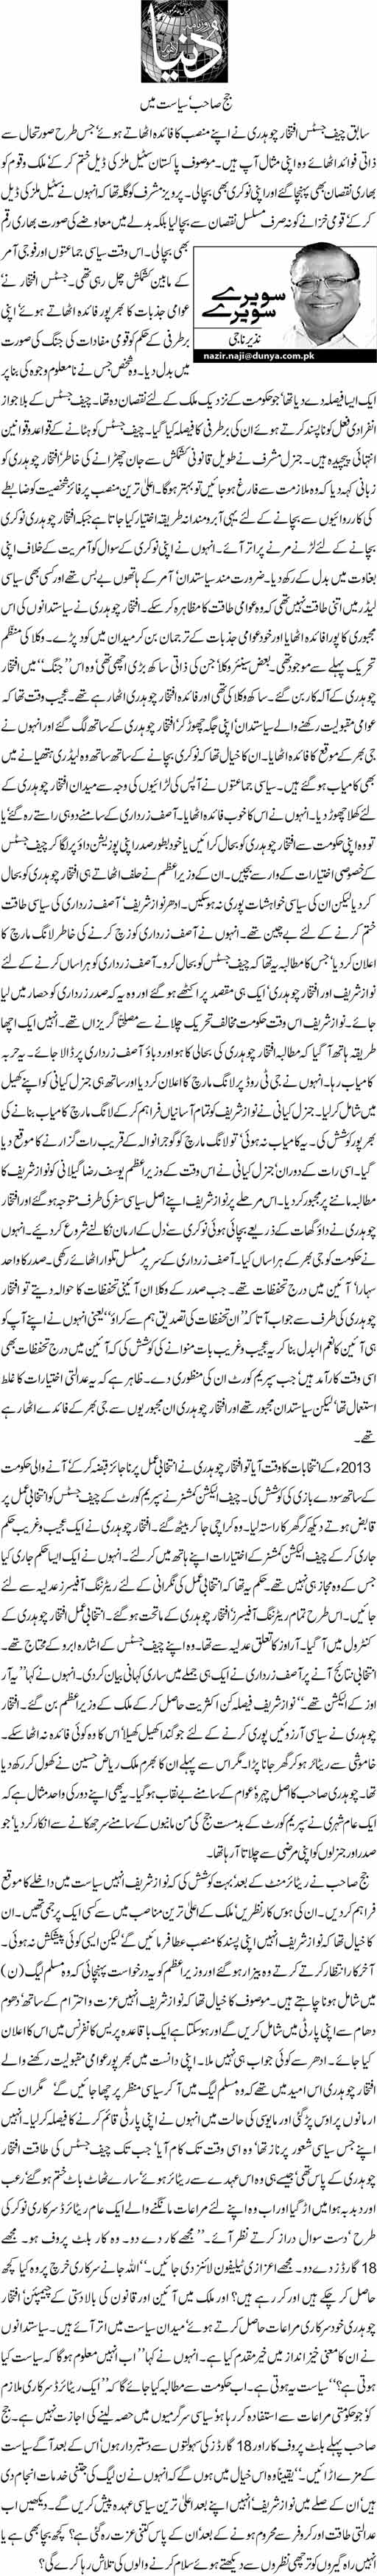 Nazir Naji's column on Iftikhar Chaudhary